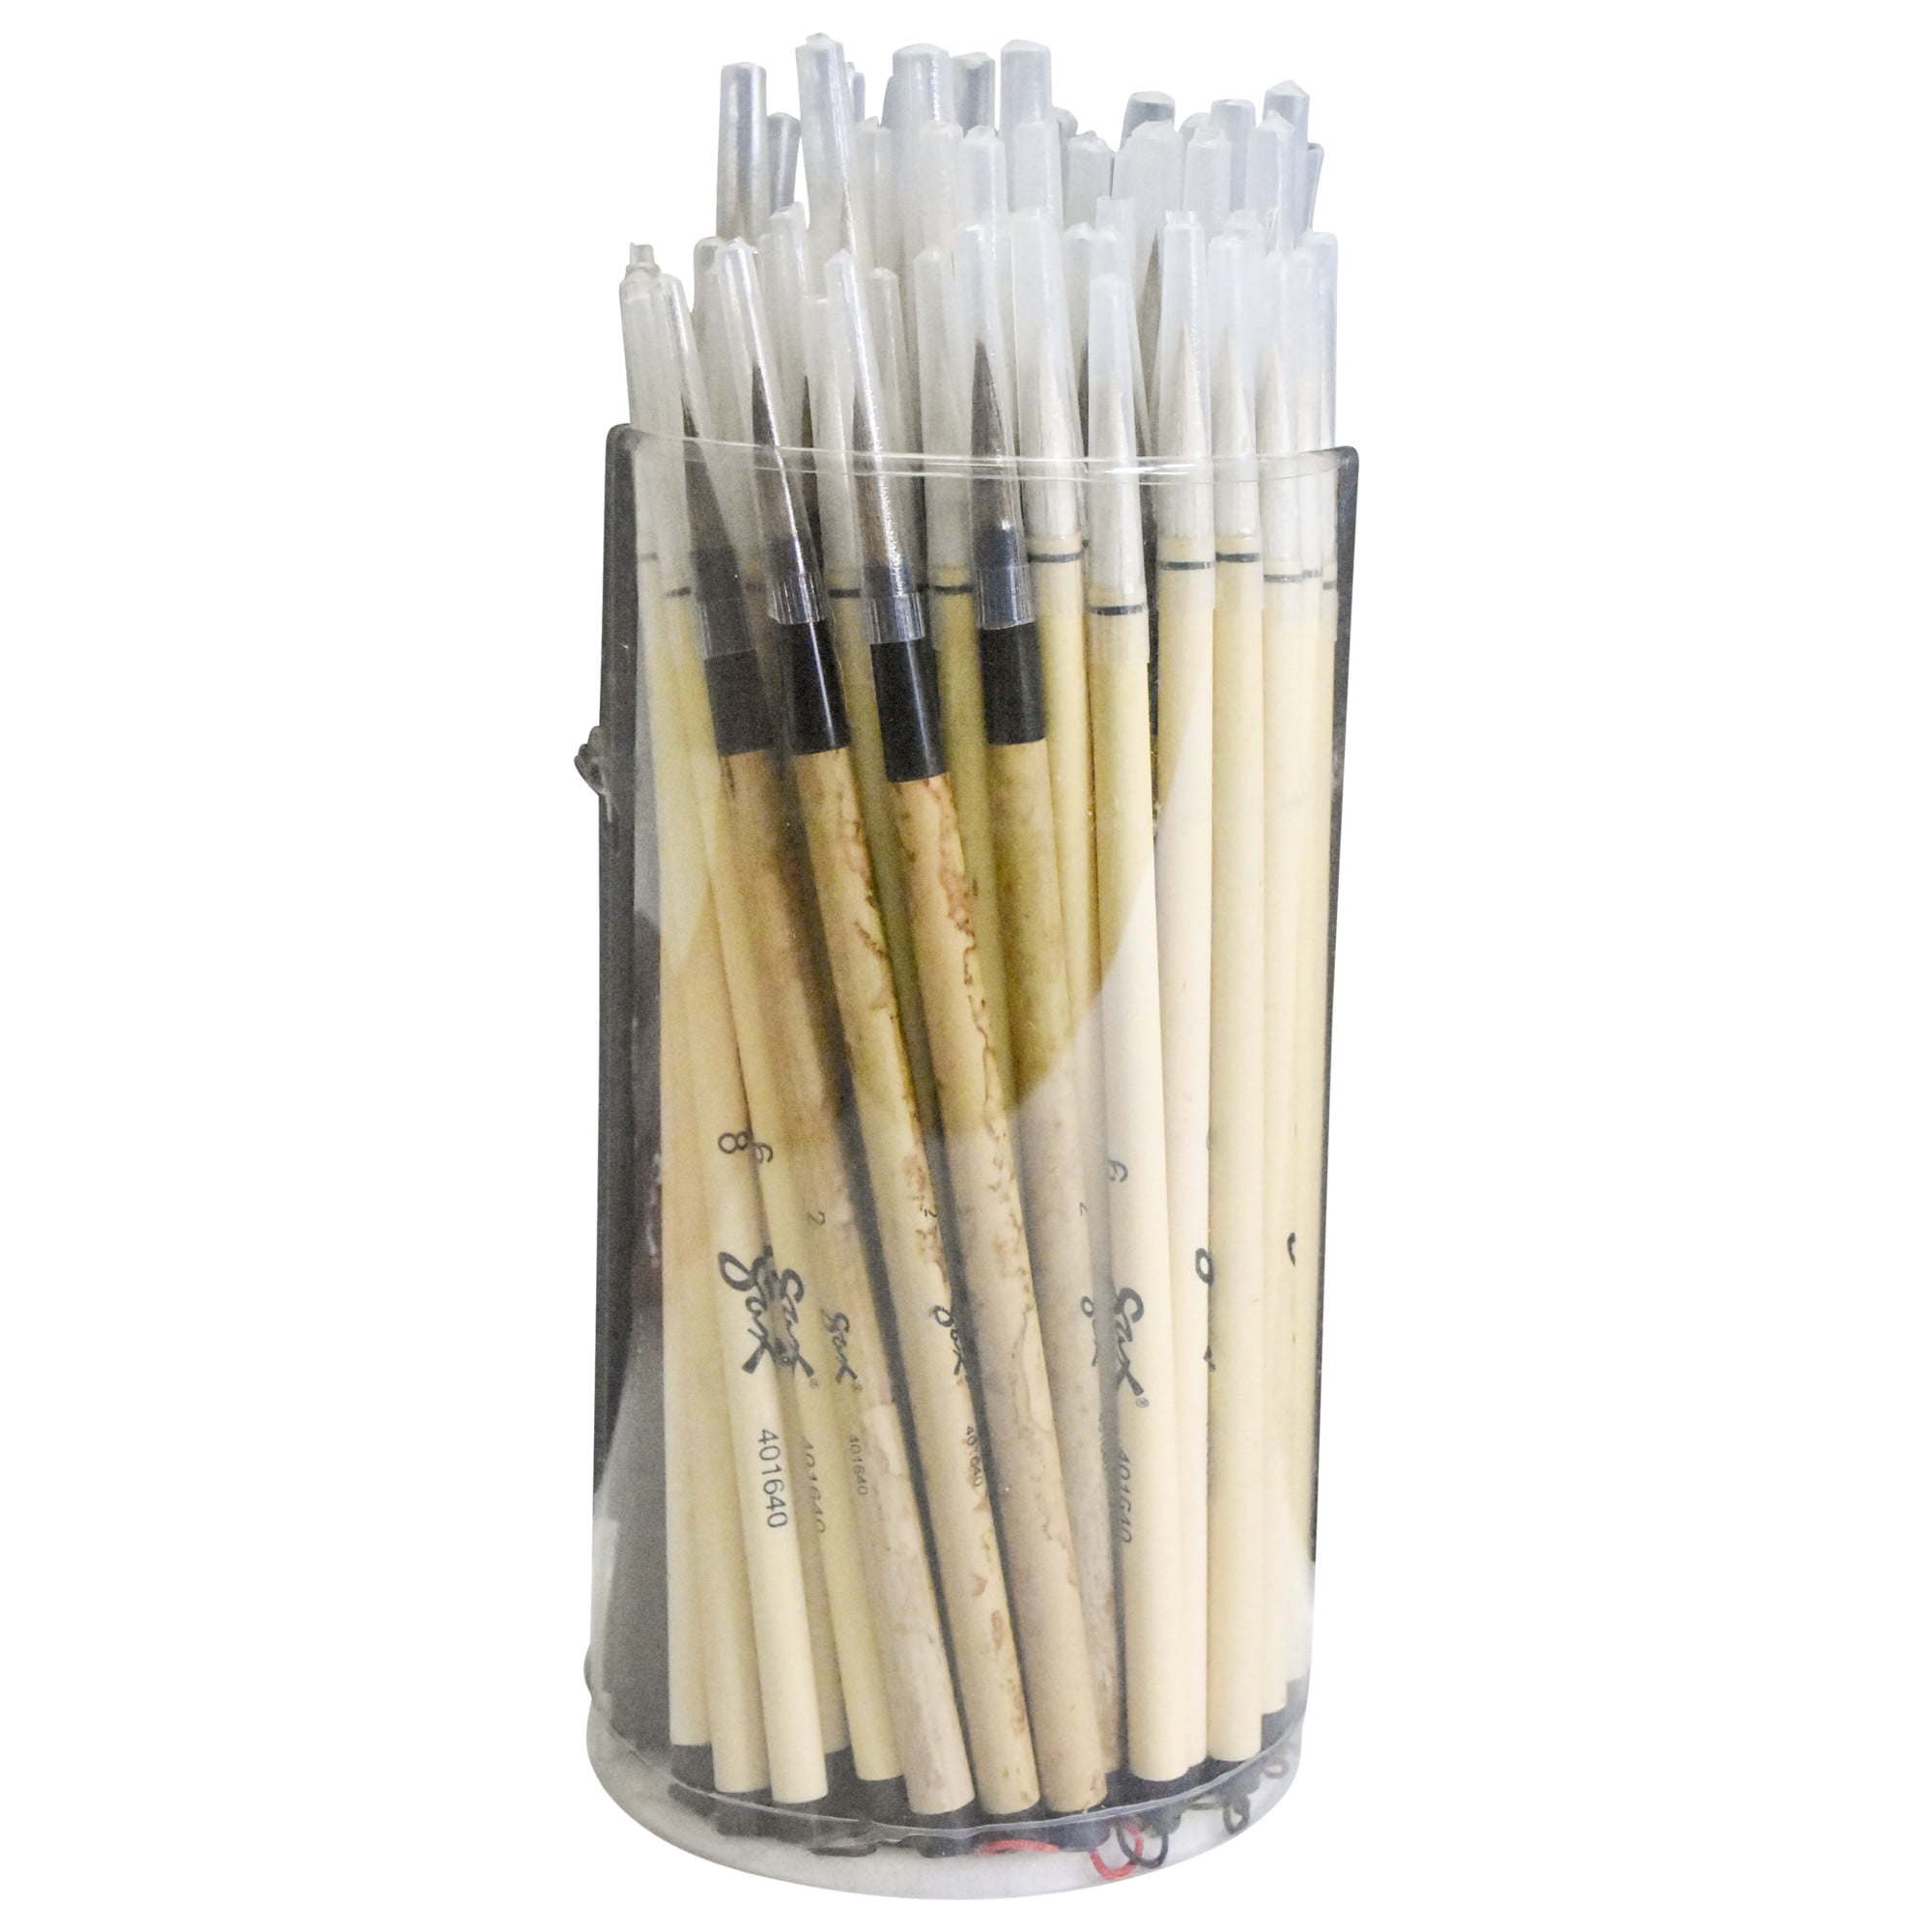 Bamboo Bendable Brushes   PMU Supplies Wholesale